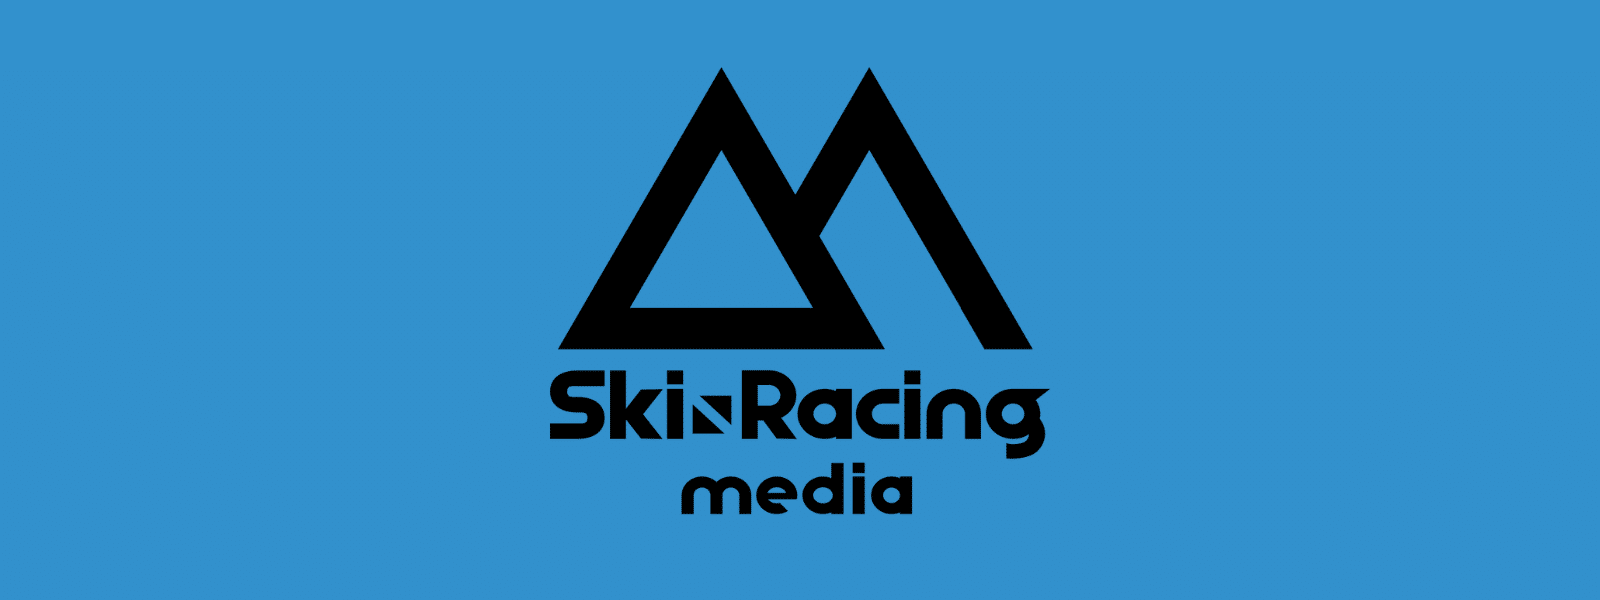 ski racing media featured image